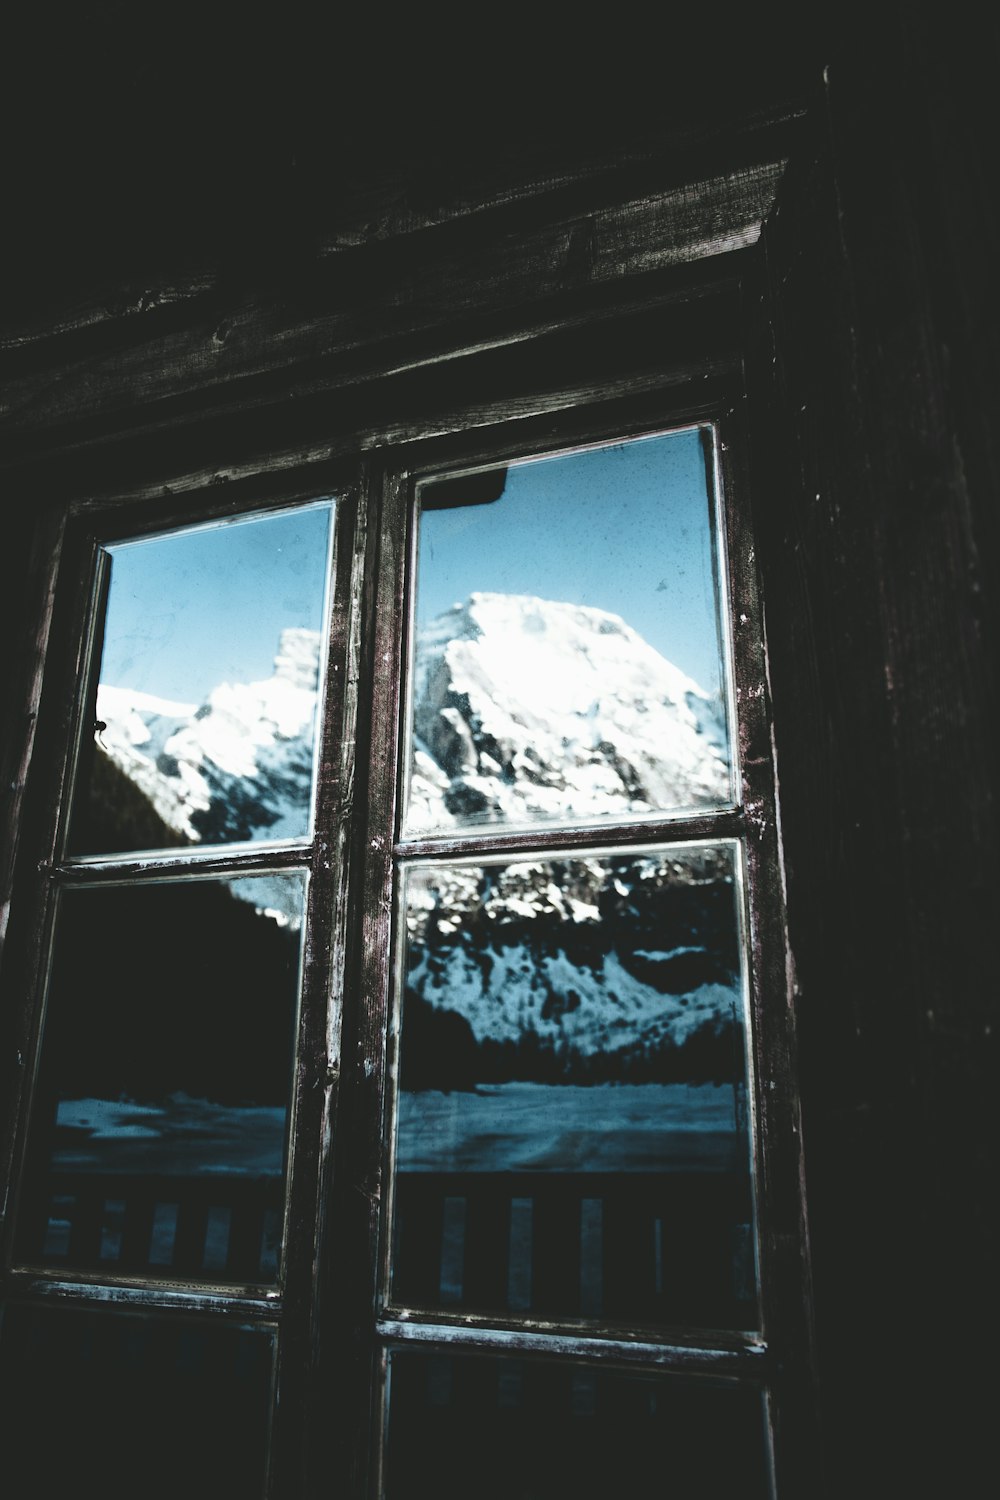 a mountain seen through a window in a dark room